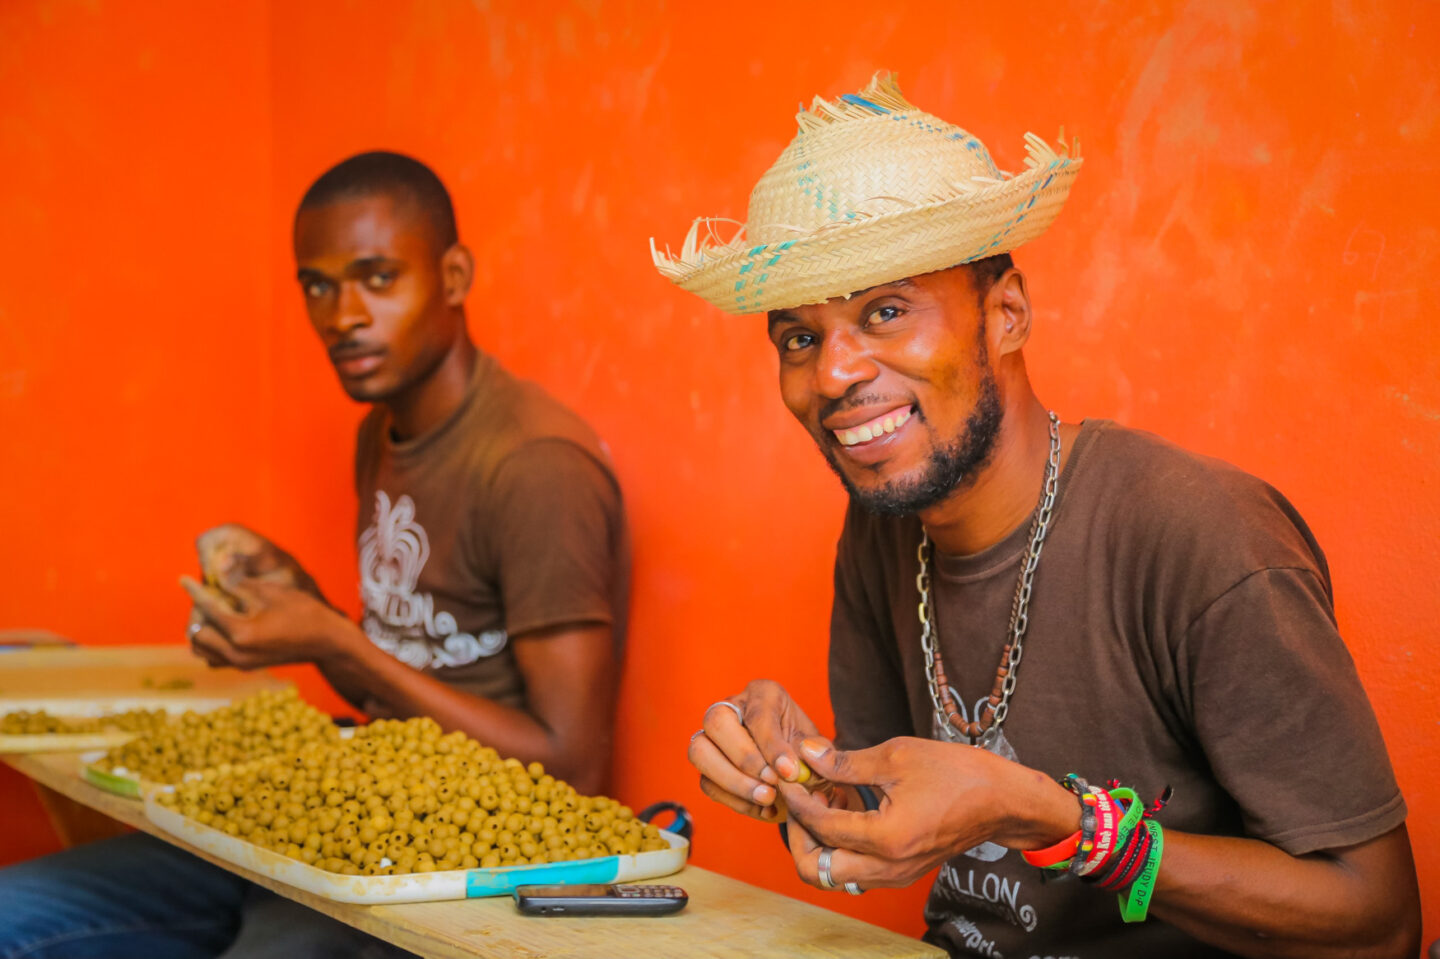 An artisan assembles beads in Haiti